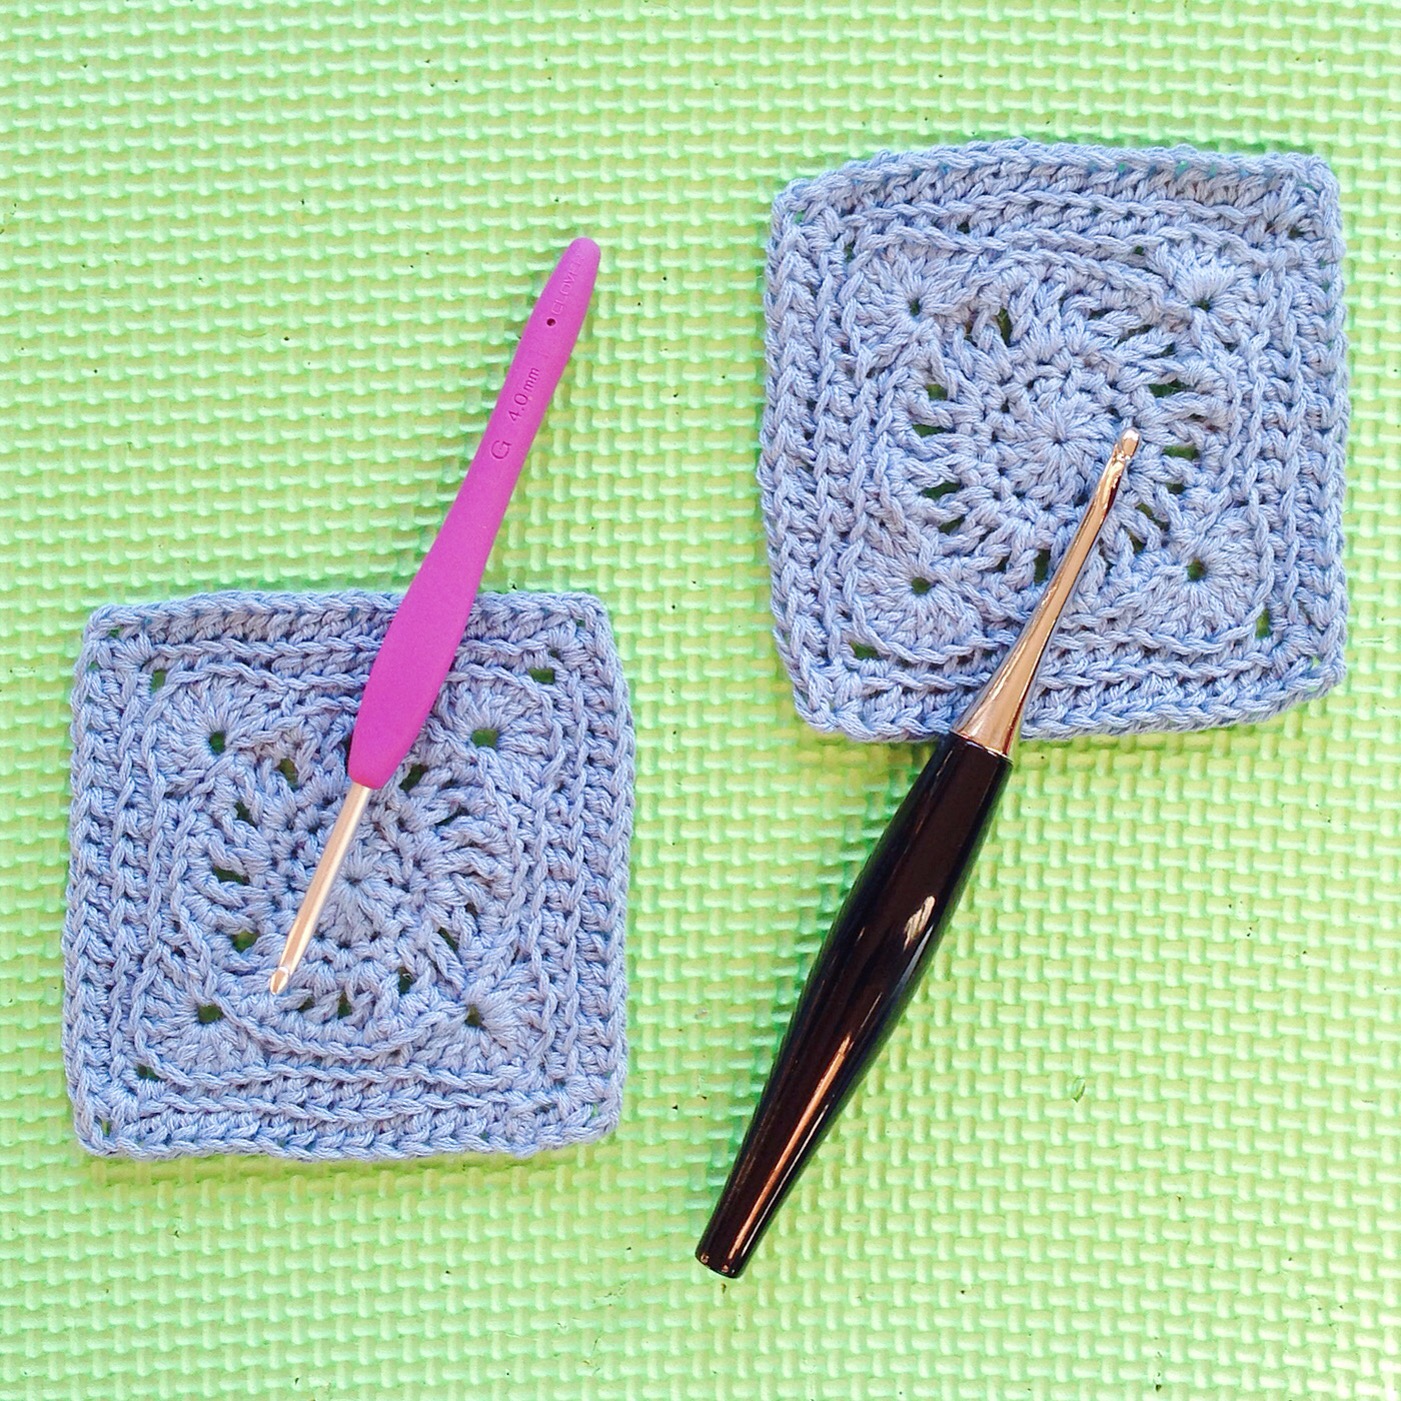 Furls Odyssey Hook Update - Crochet 🧶 - Ribblr community